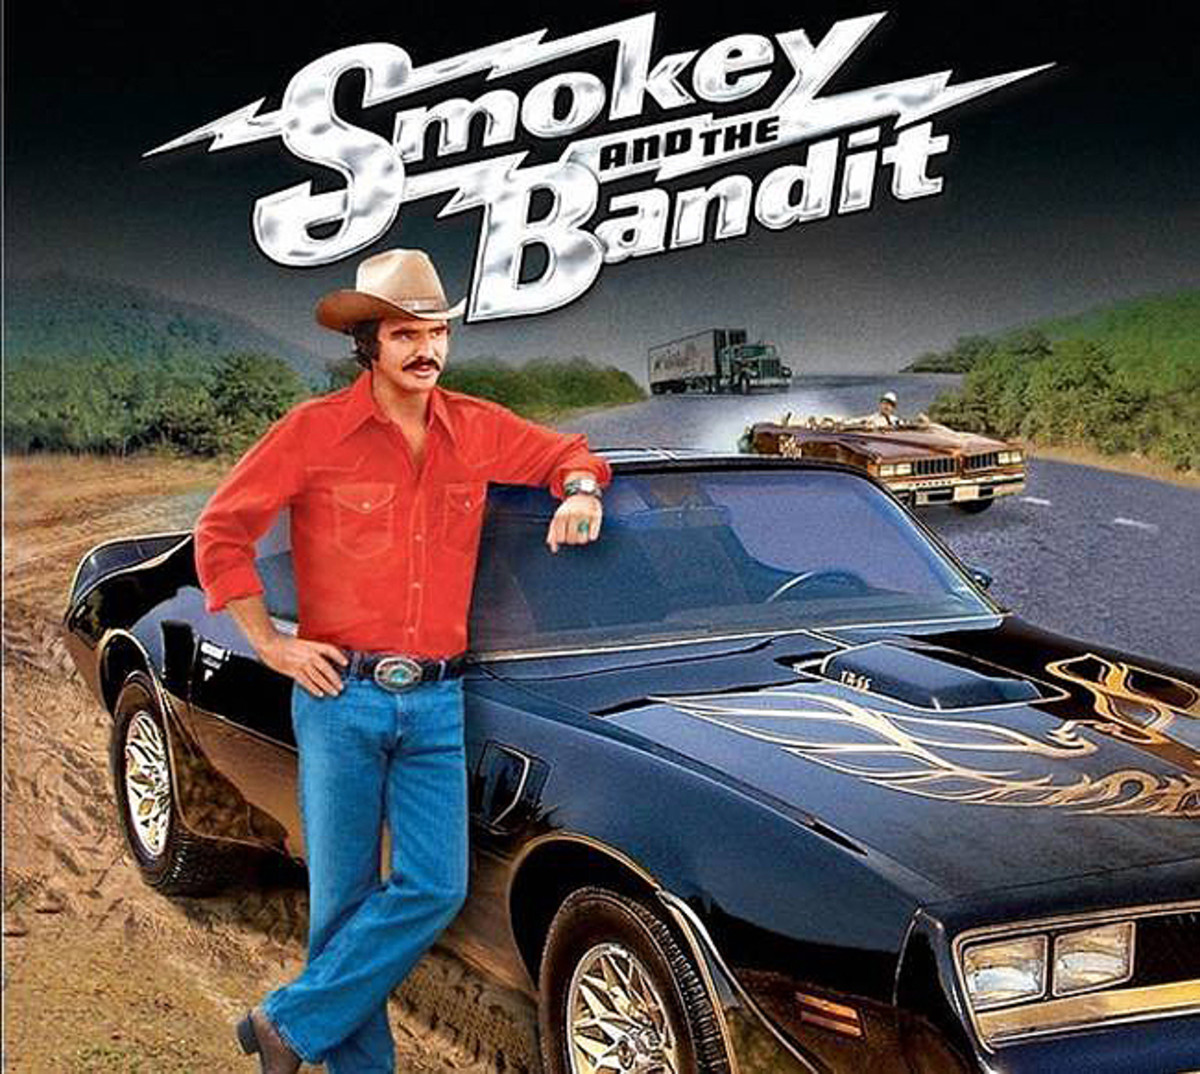 Smokey and the bandit car